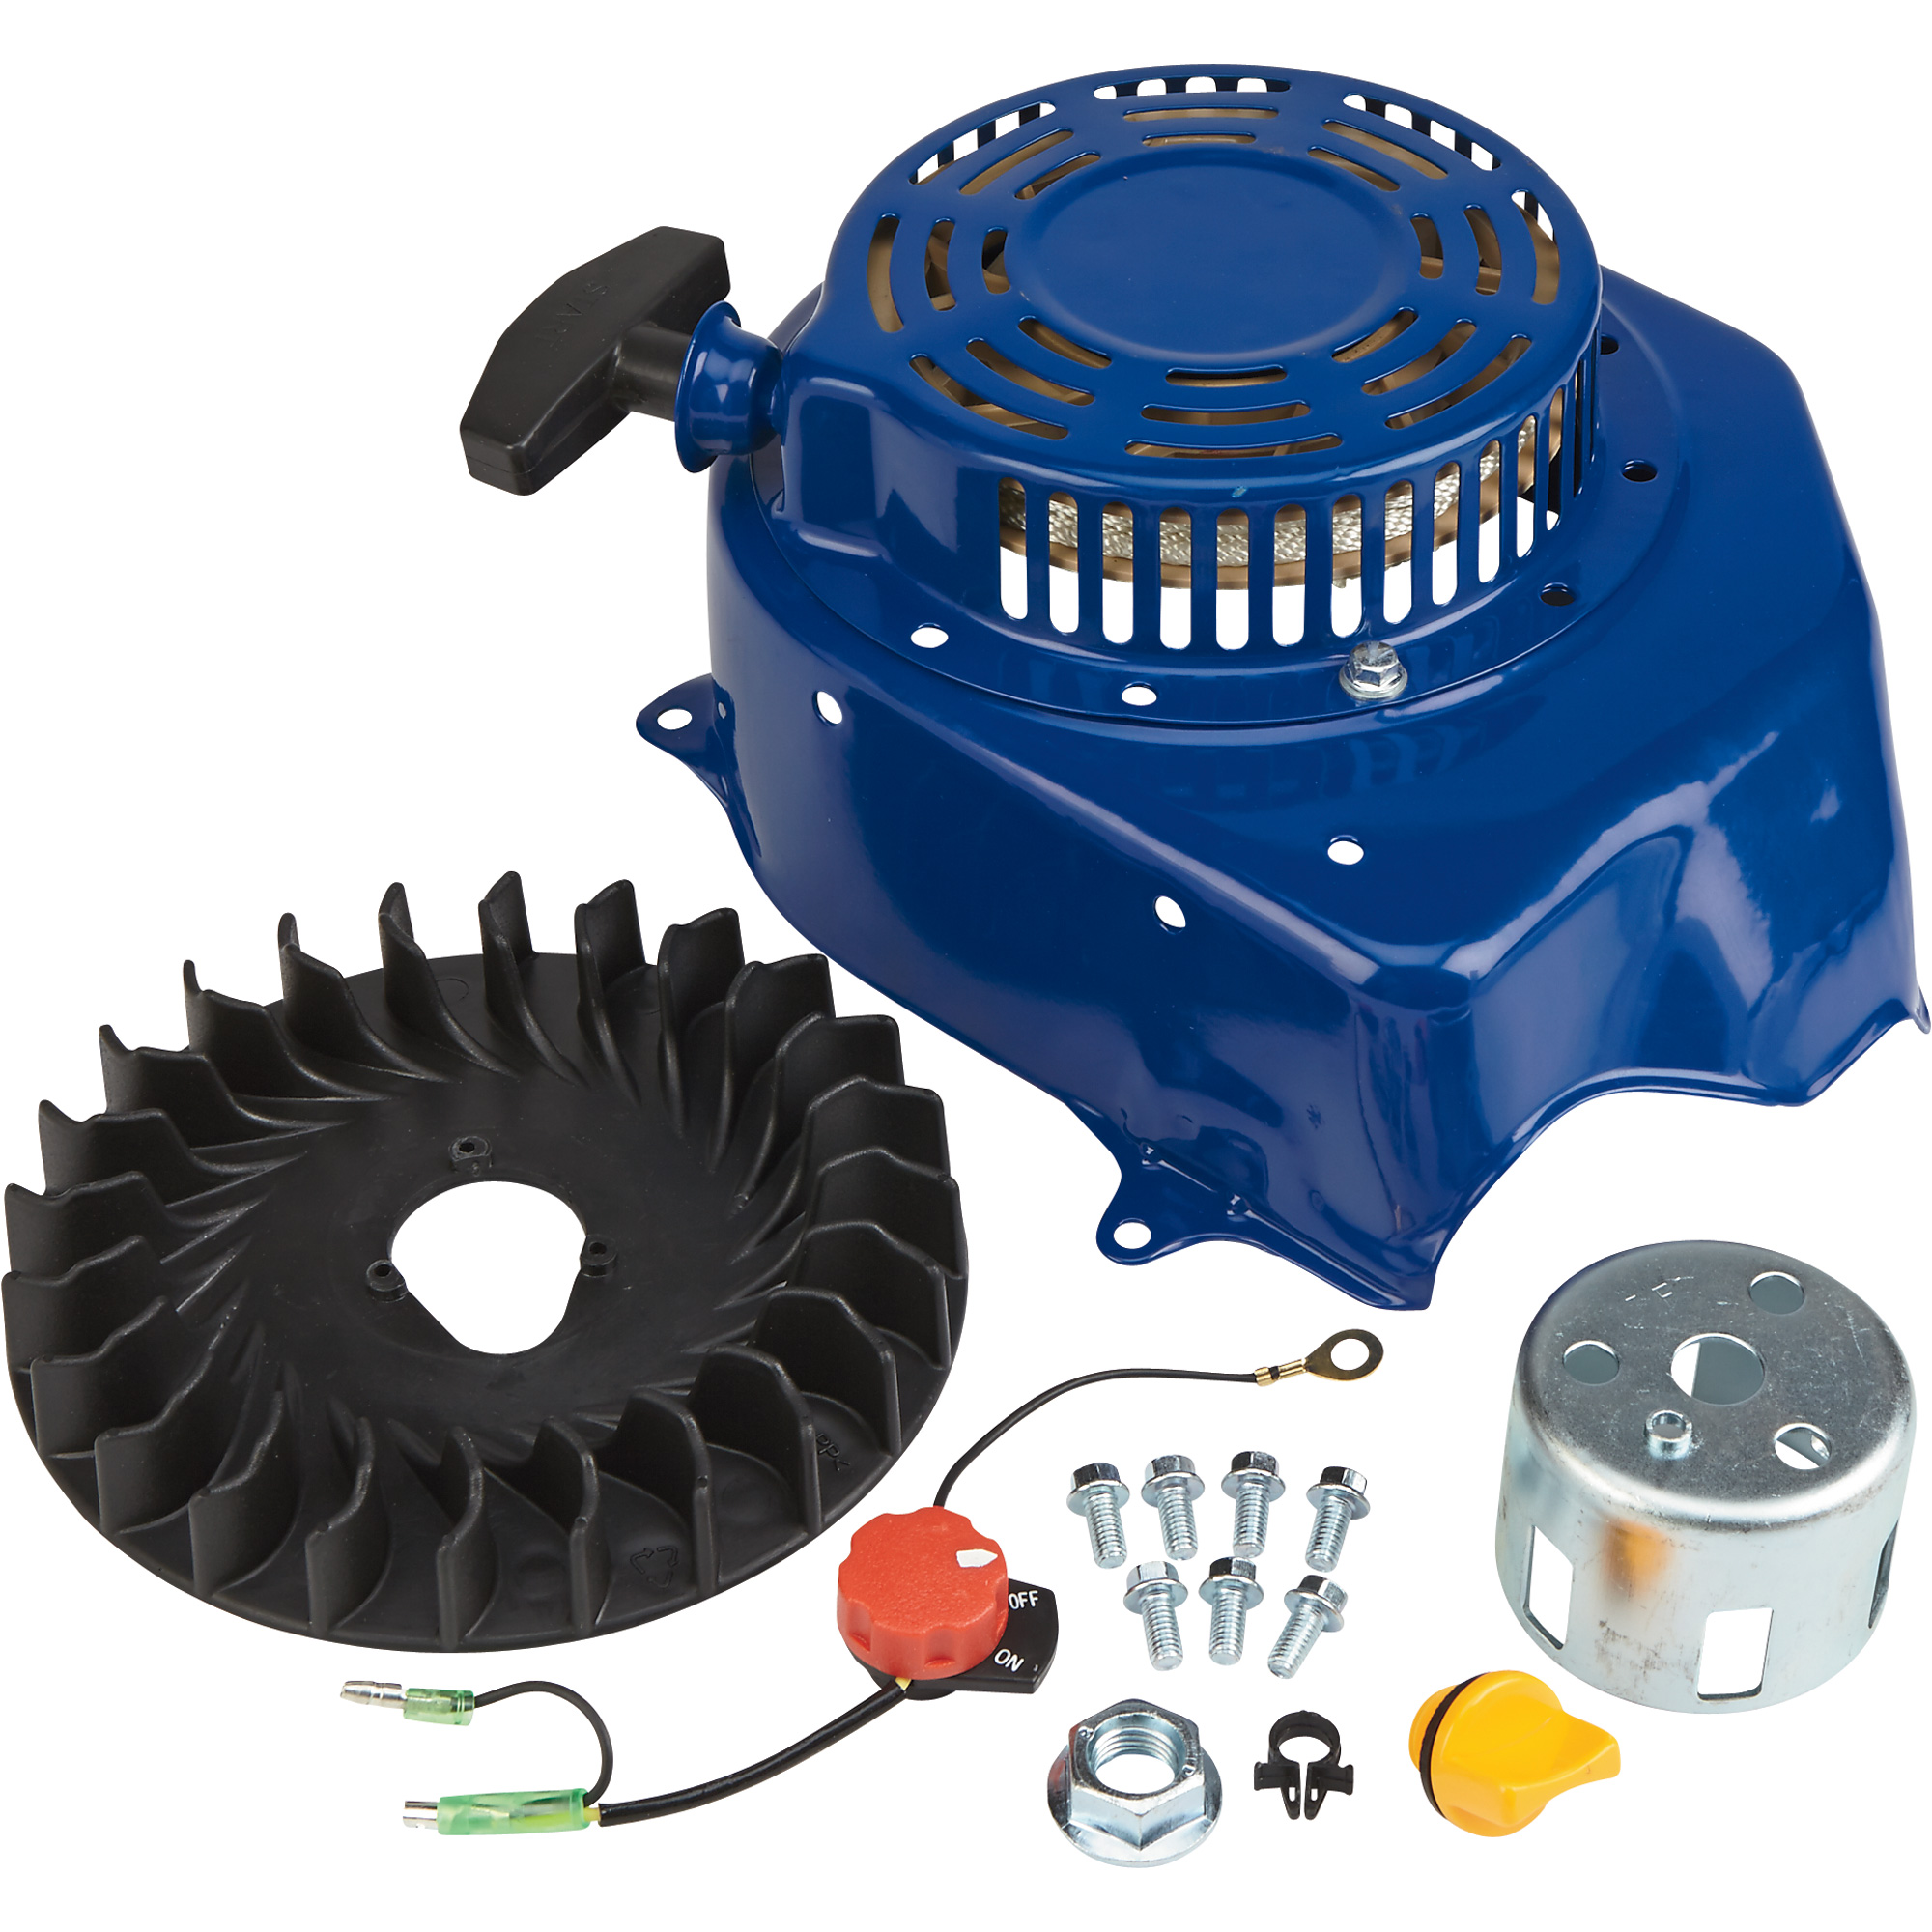 Powerhorse Replacement Recoil Starter Kit for Item# 45749, Powerhorse 208cc OHV Horizontal Engine